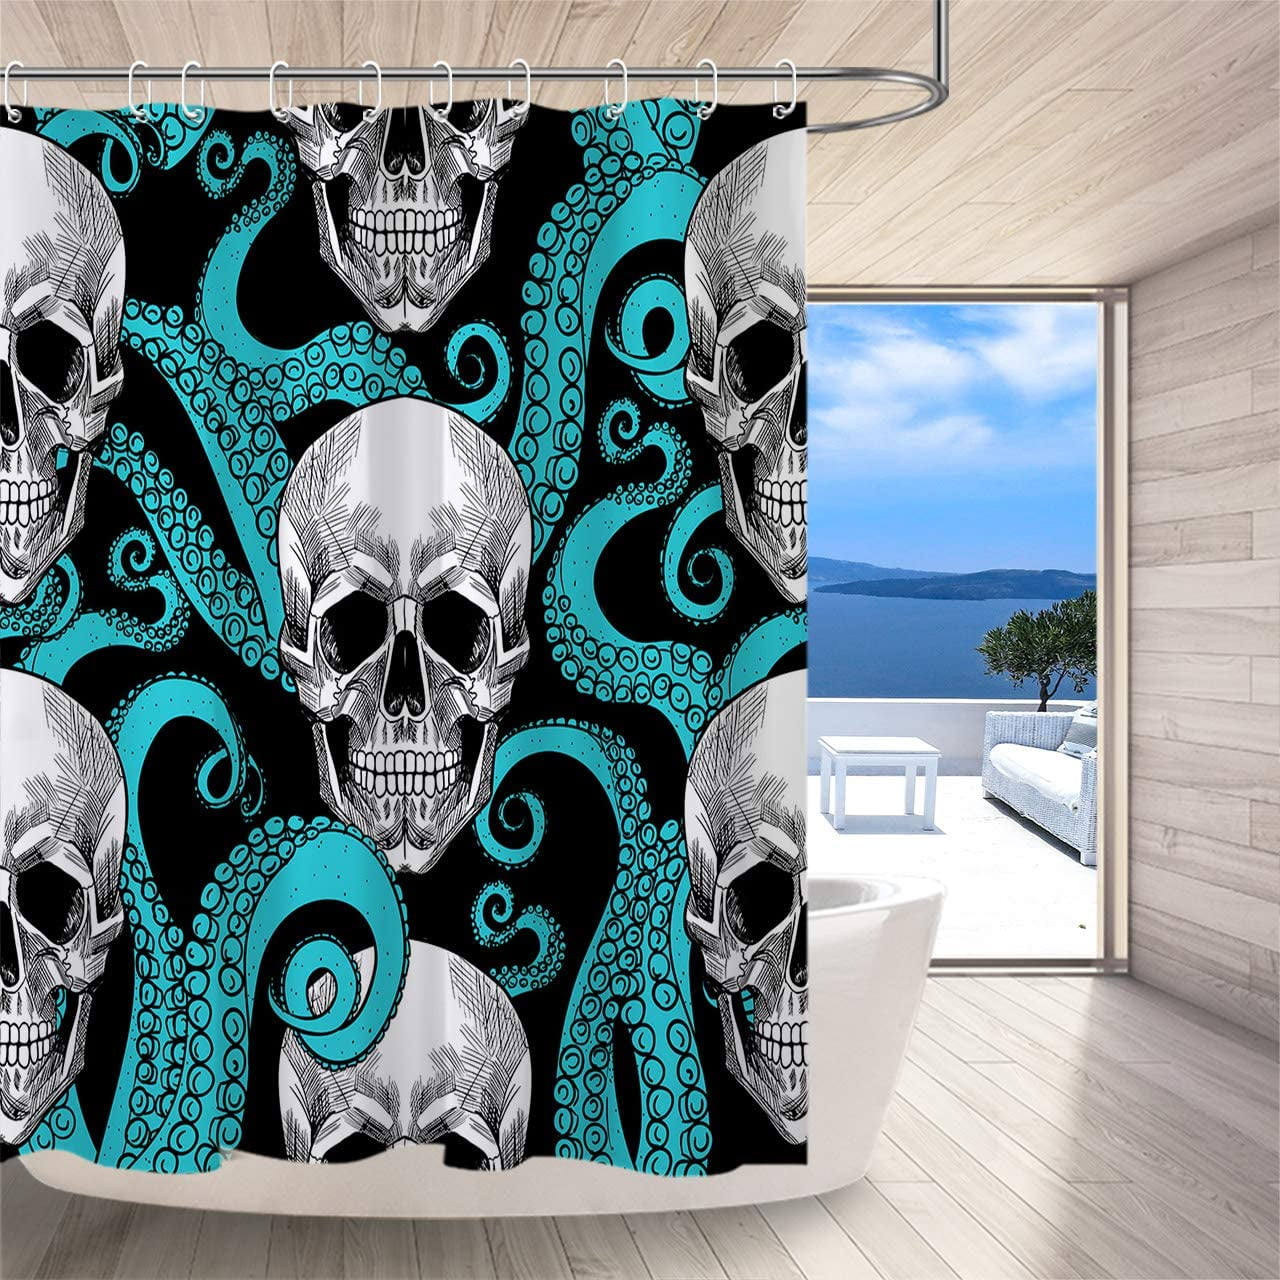 Waterproof Fabric Bathroom Set Halloween Horror Skull Shower Curtain Liner Hooks 